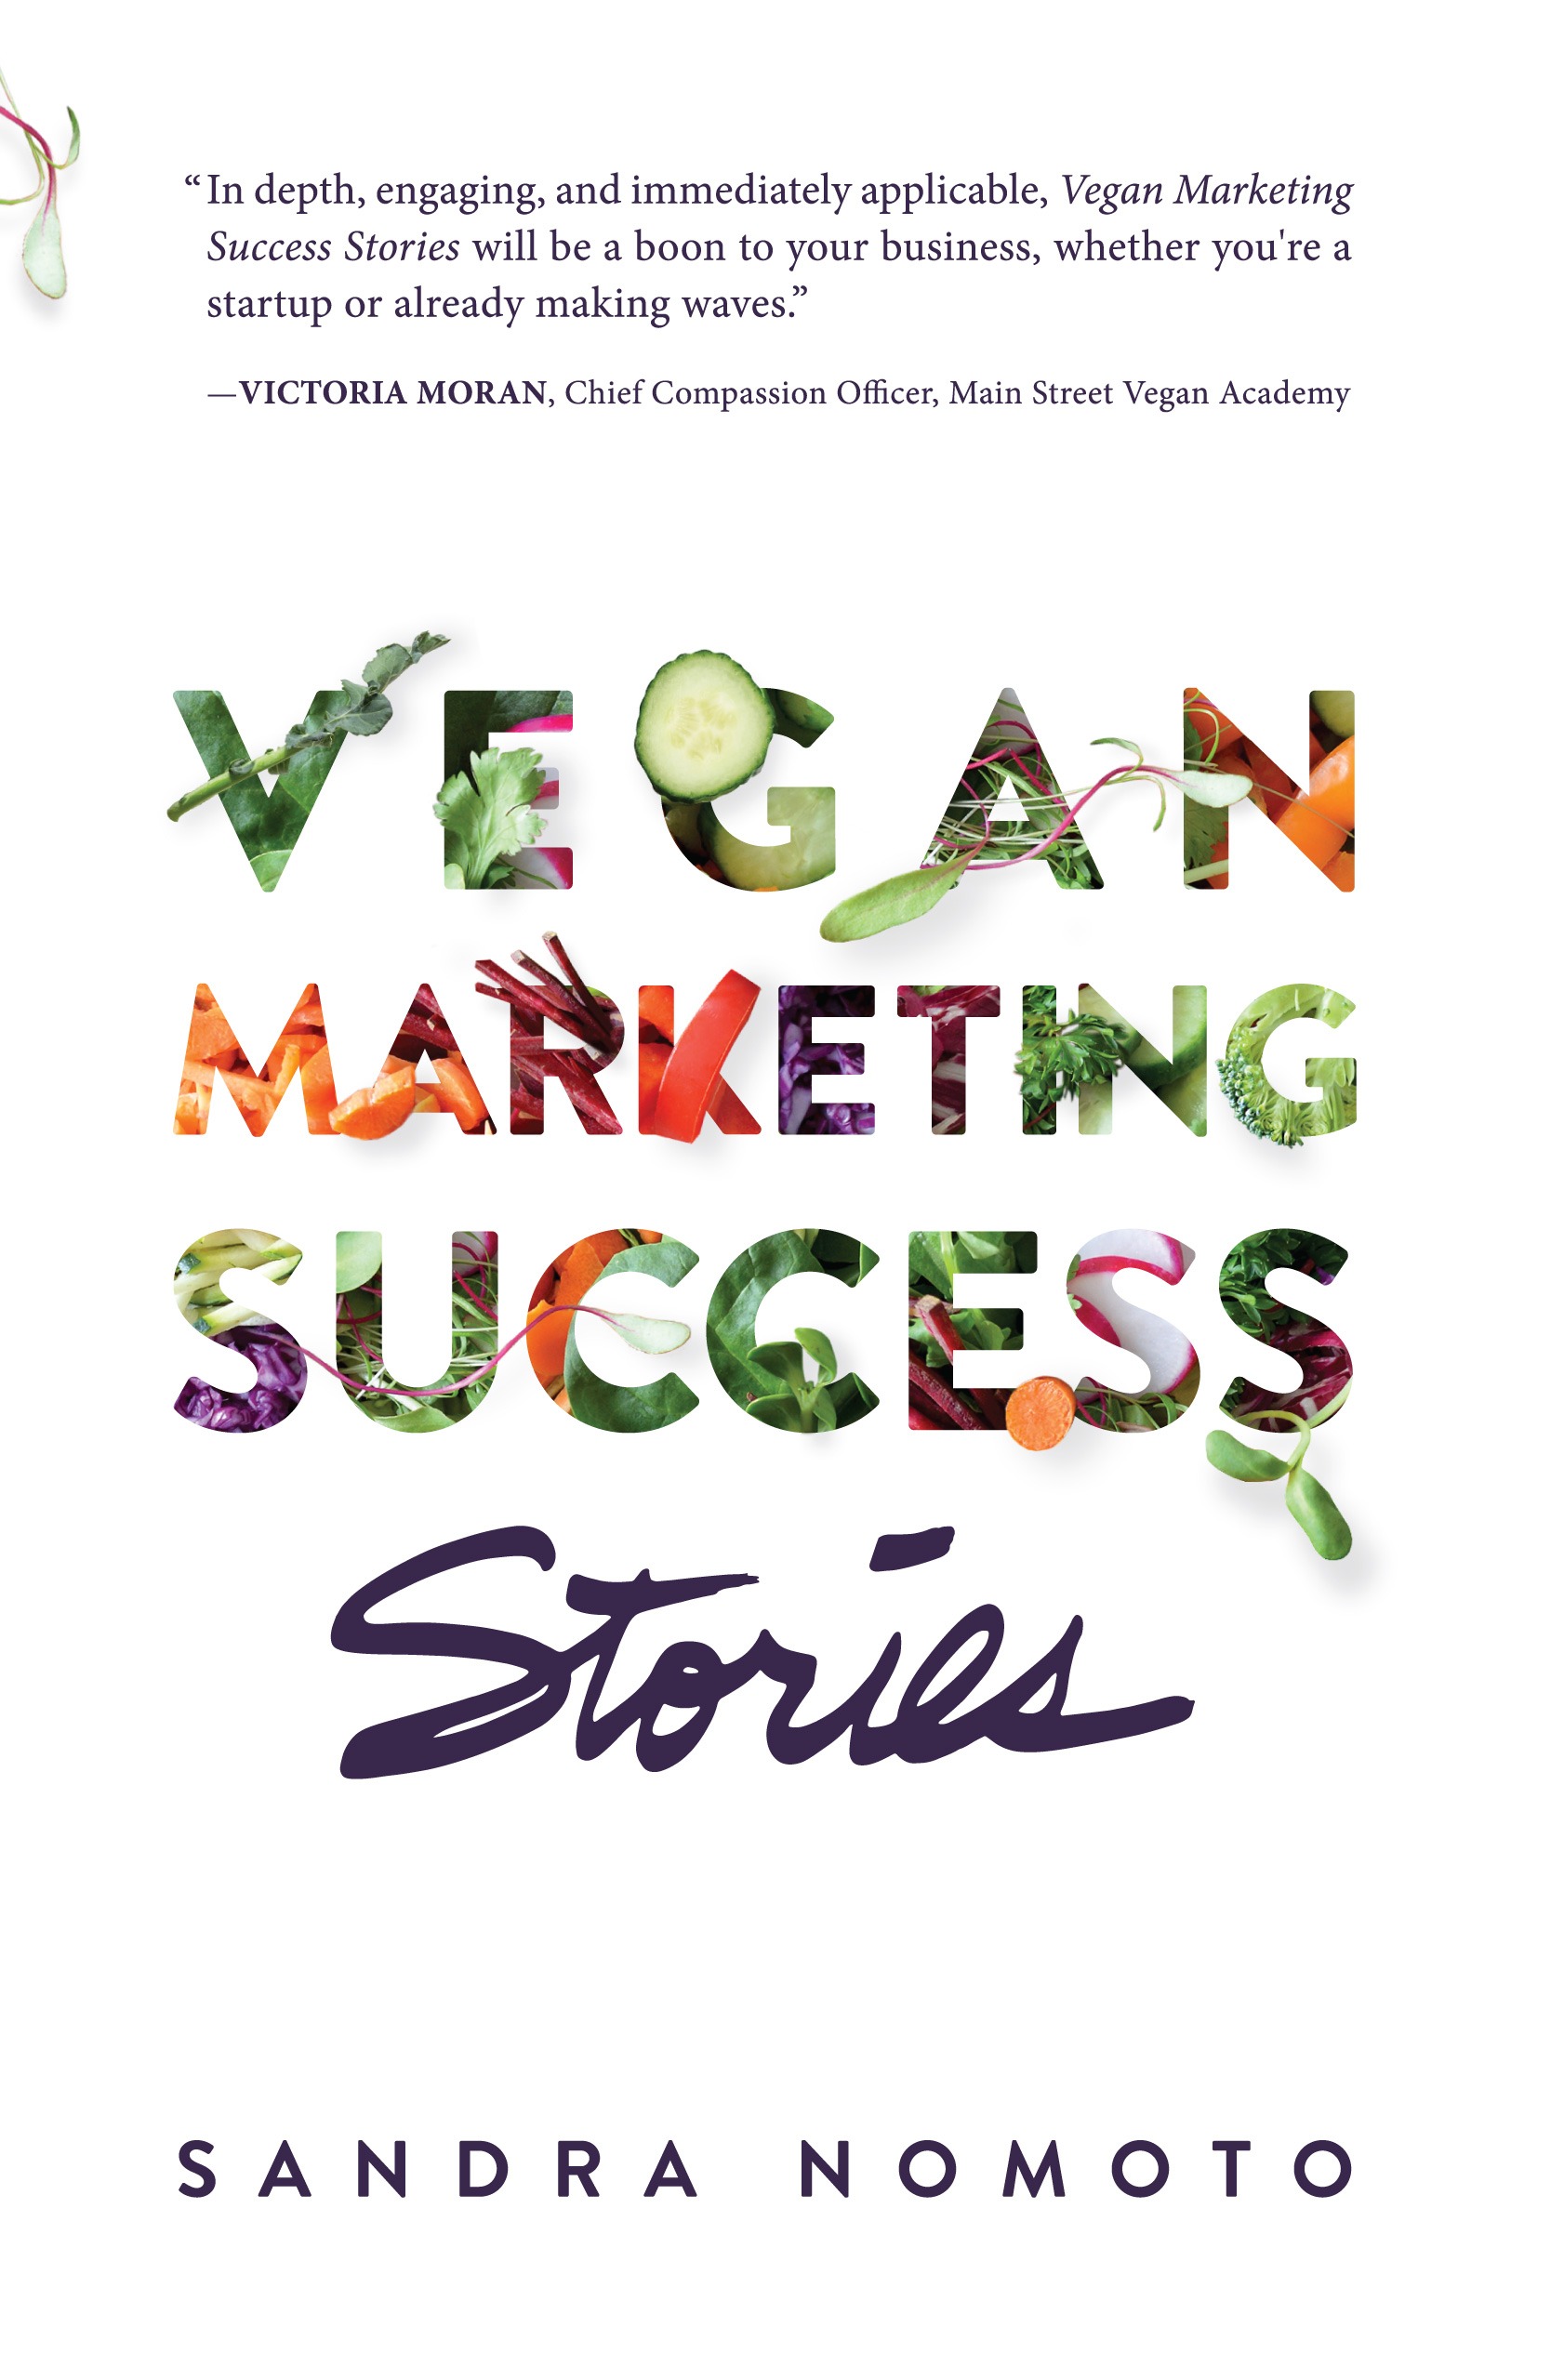 Book cover for Sandra Nomoto's Vegan Marketing Success Stories